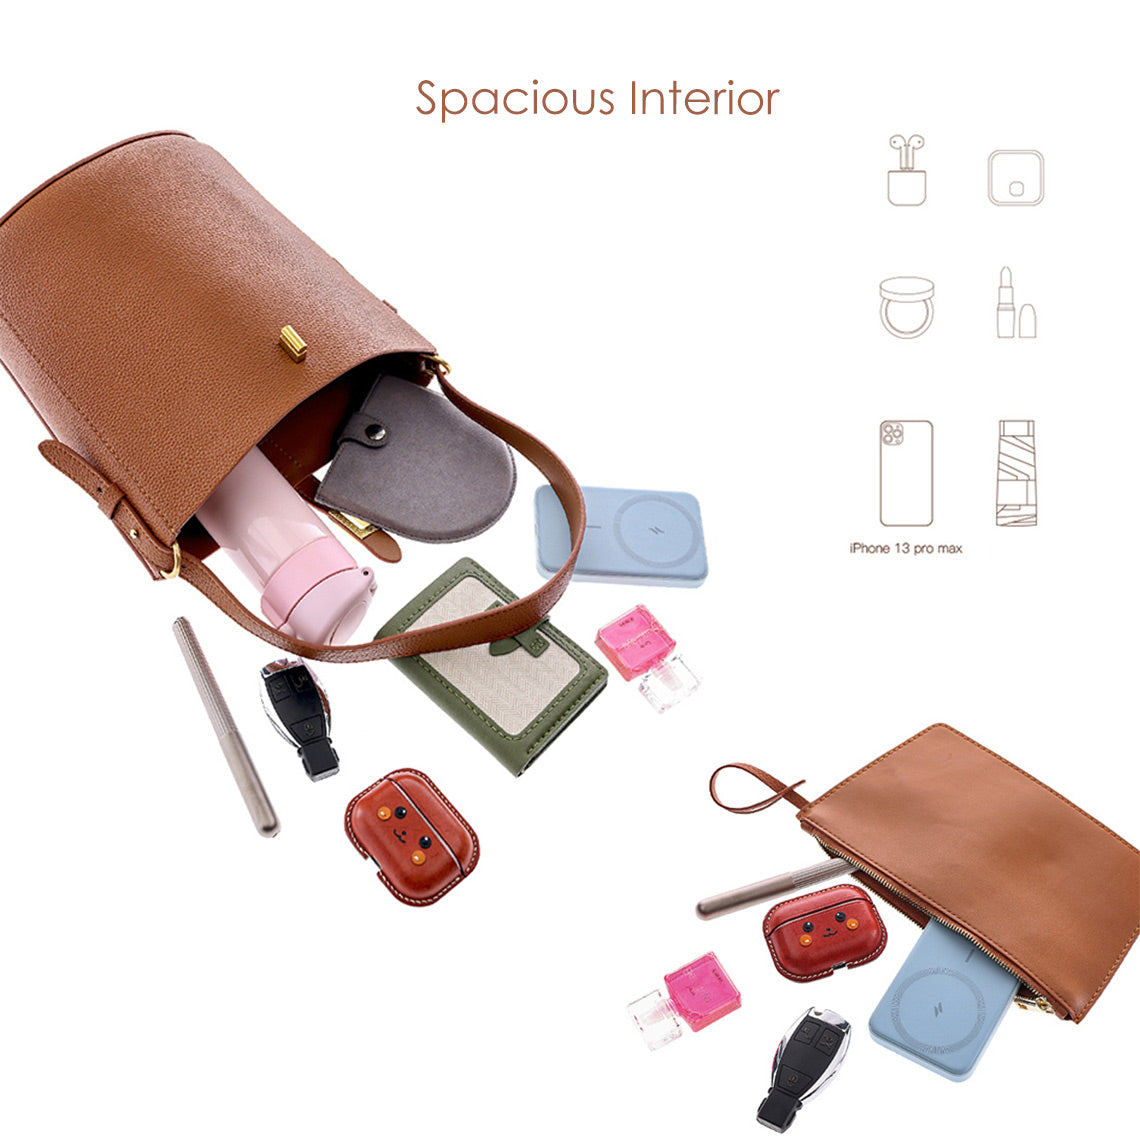 Designer Bucket Bag Handbag's Spacious Interior | What's in Your Bag - POPSEWING™